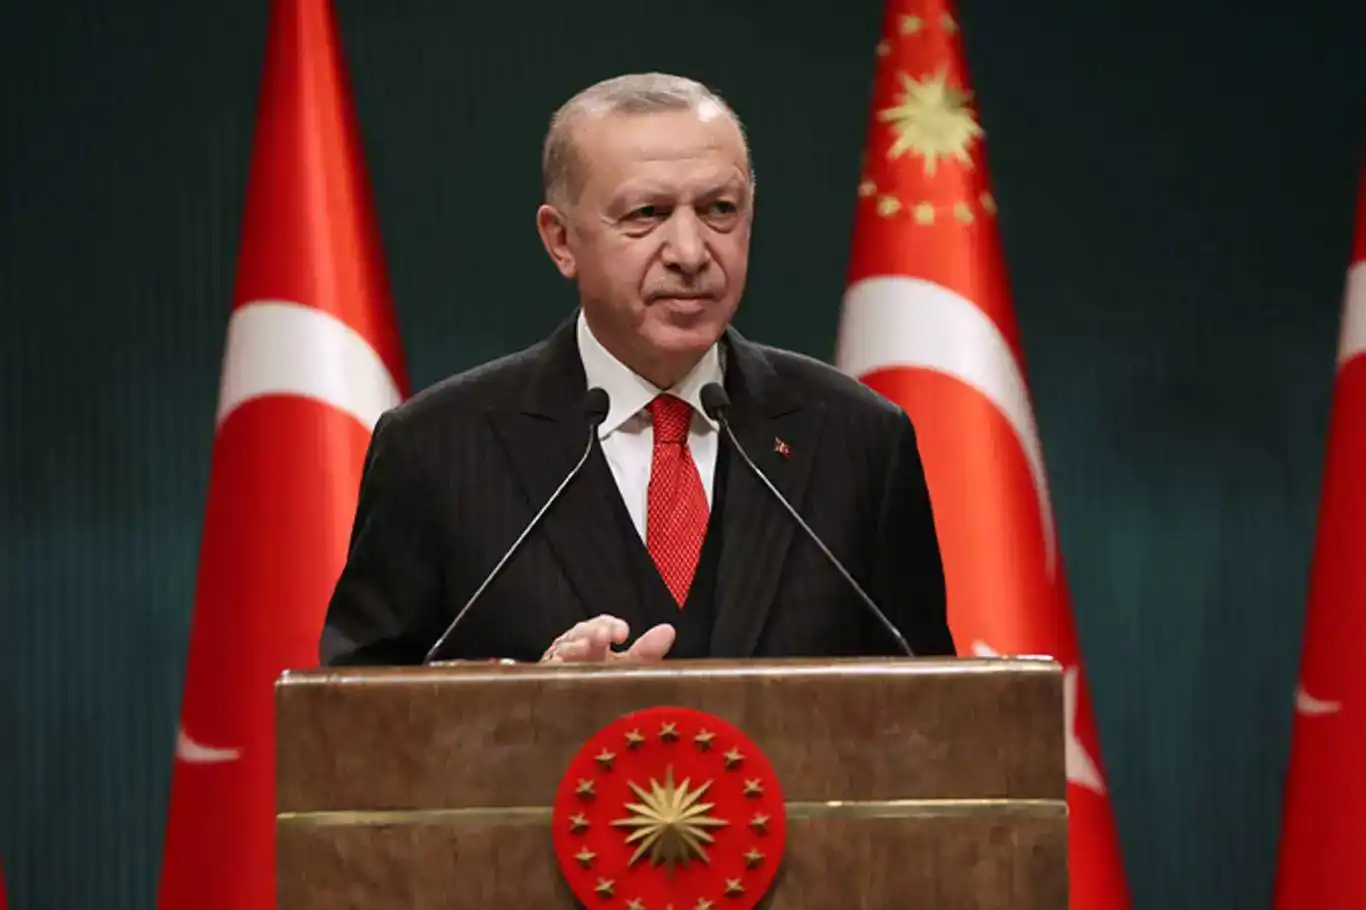 Türkiye's Erdogan urges diplomacy and dialogue for Ukraine peace